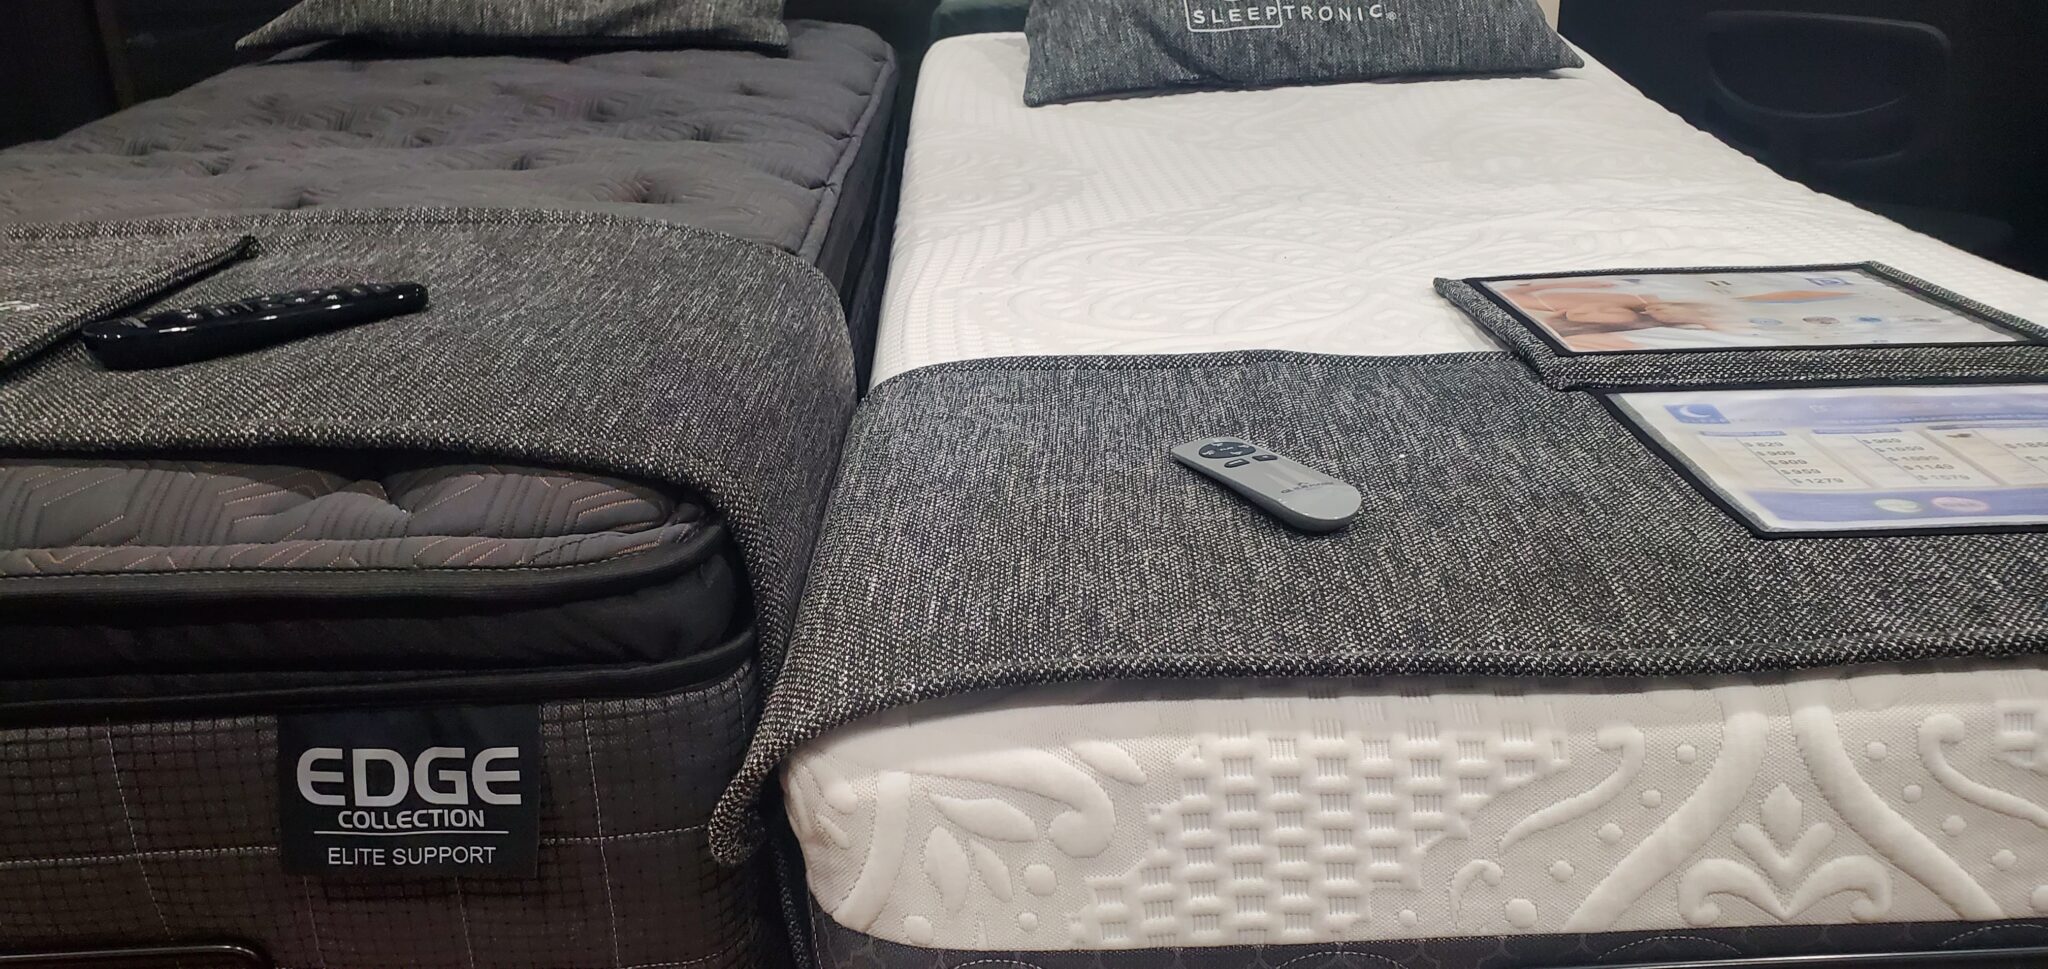 Sleeptronic mattress for the best sleep